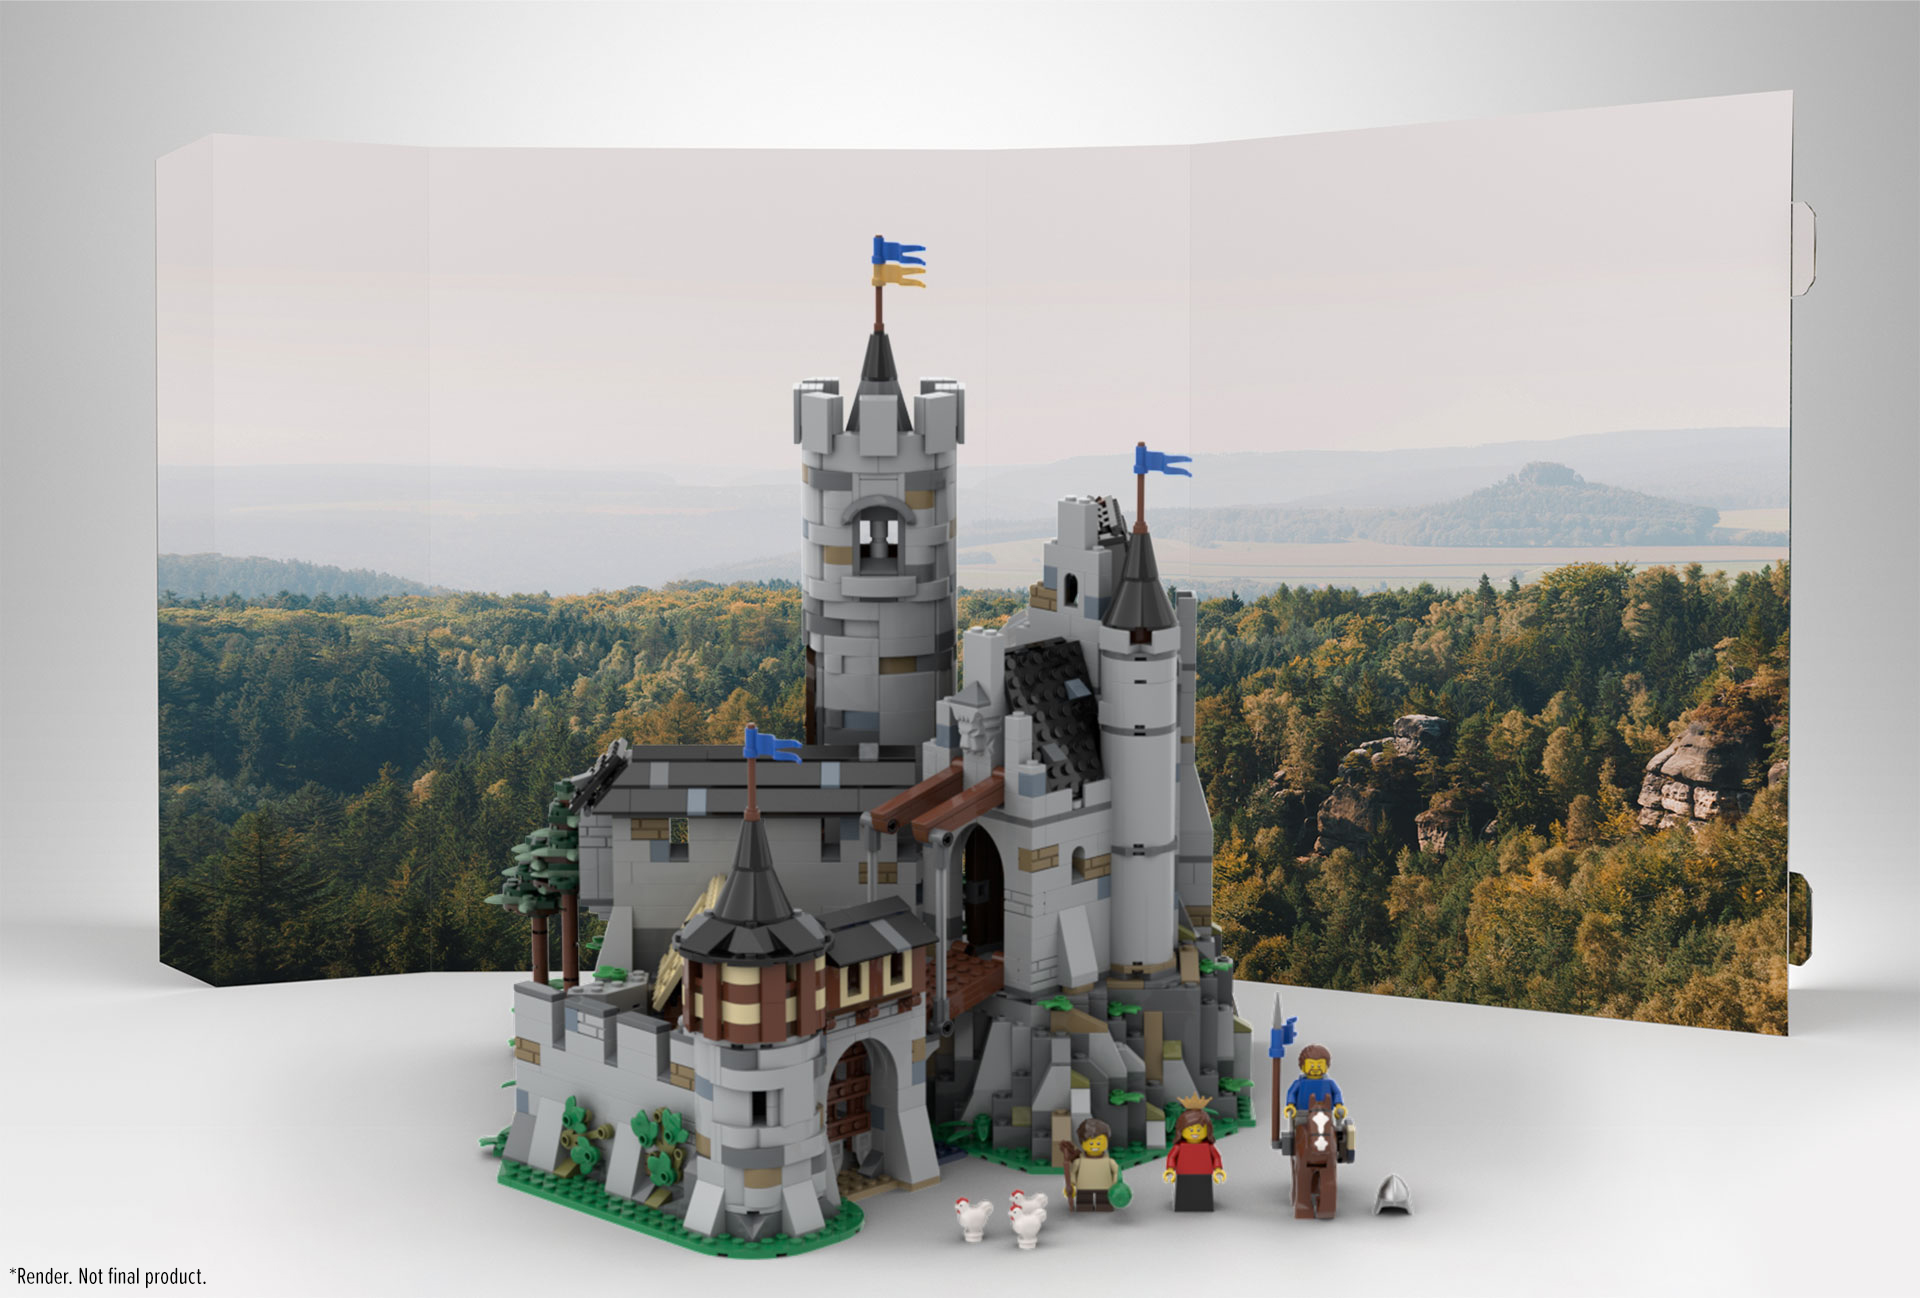 medieval lego castle